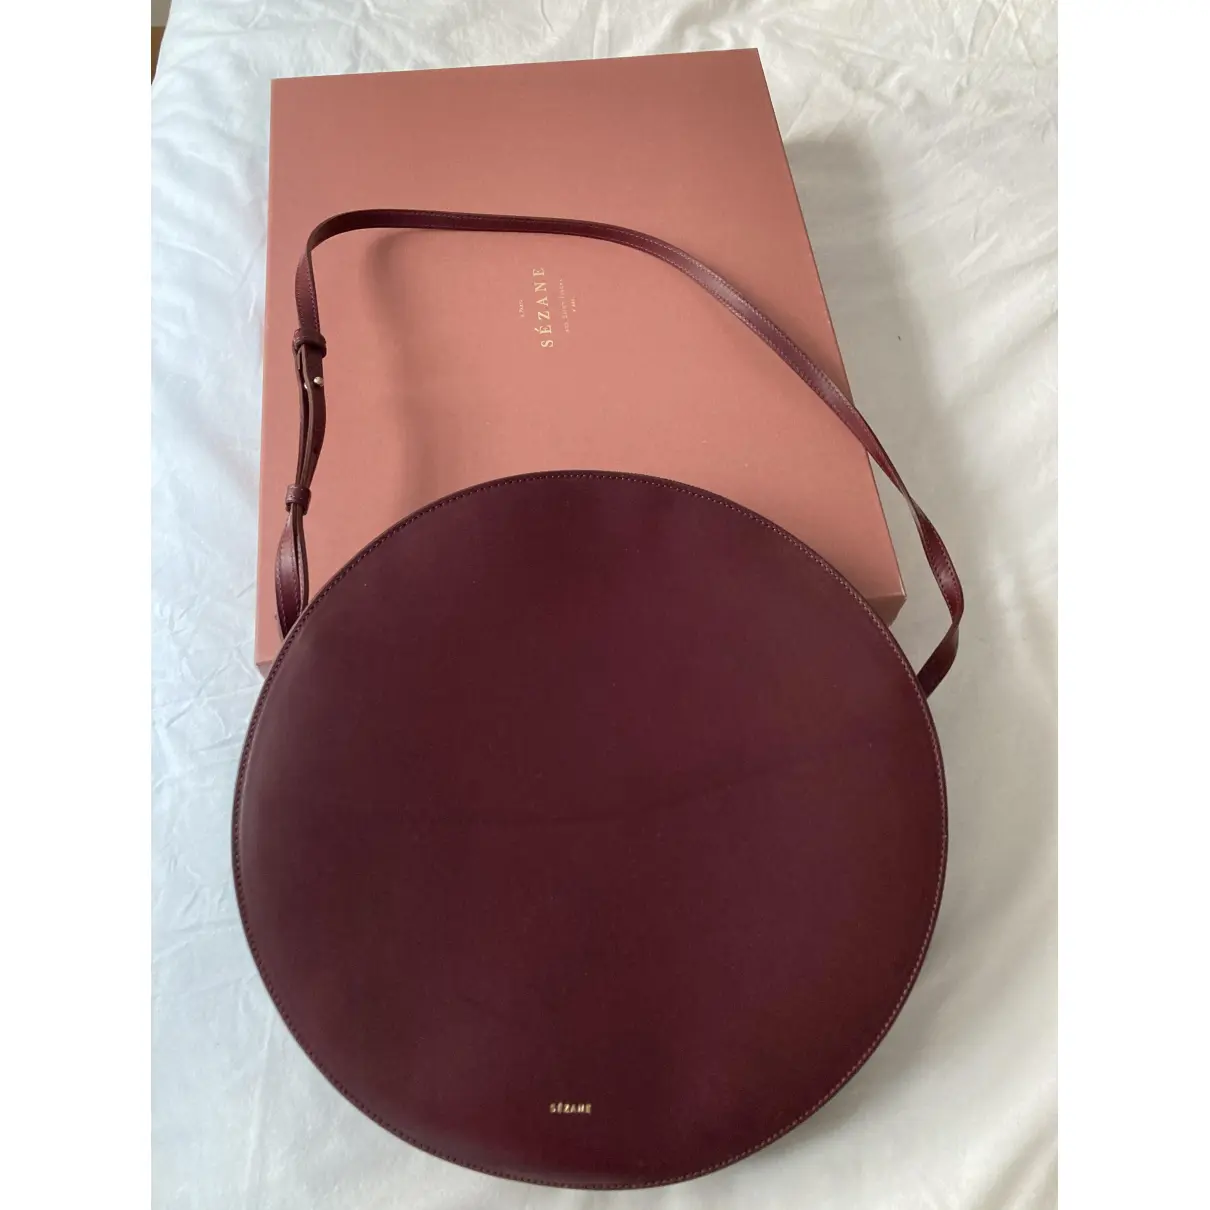 Buy Sézane Fall Winter 2020 leather handbag online